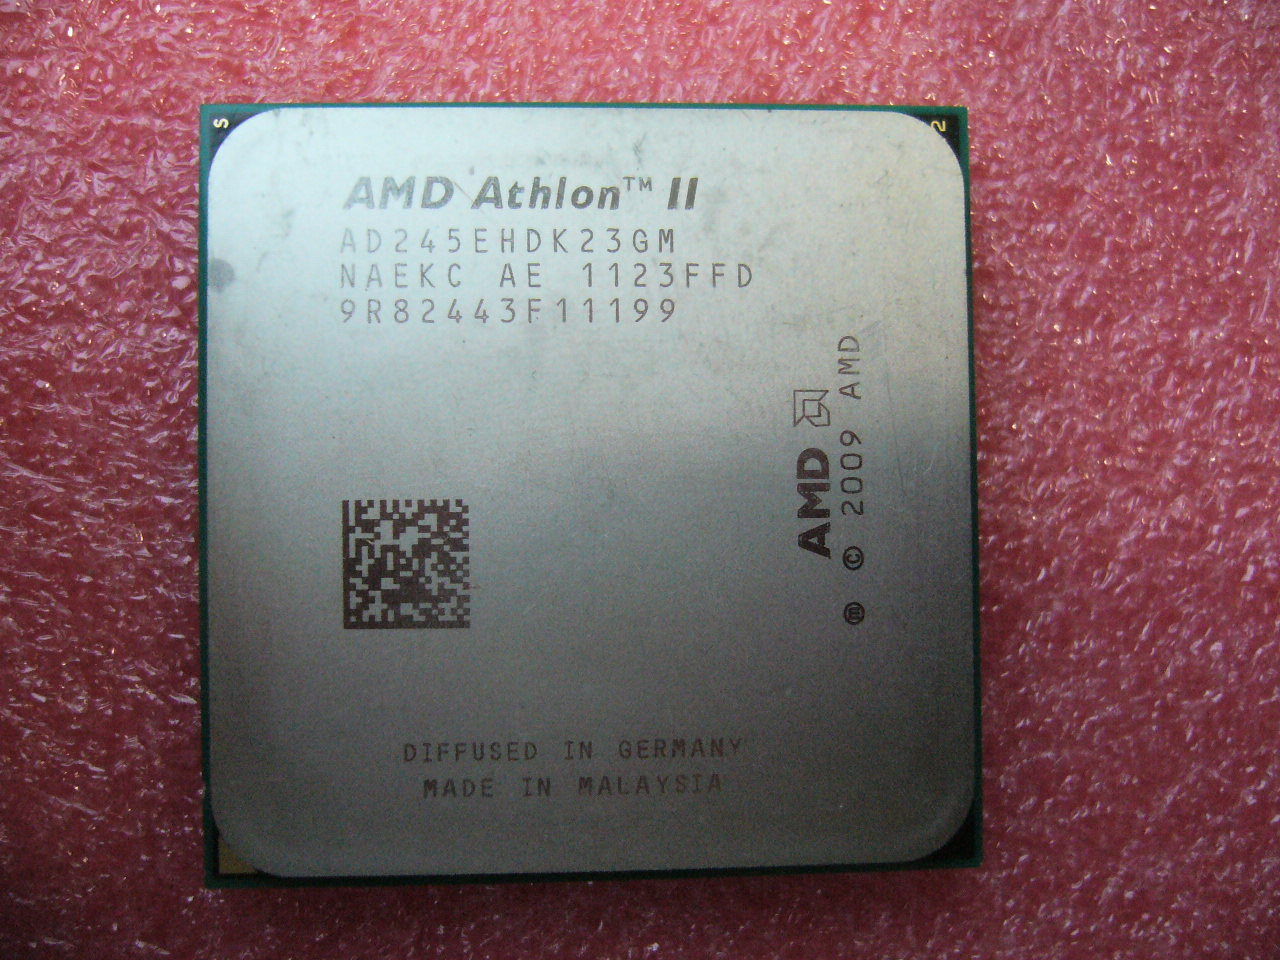 QTY 1x AMD Athlon II X2 245e 2.9 GHz Dual-Core (AD245EHDK23GM) CPU AM3 45W